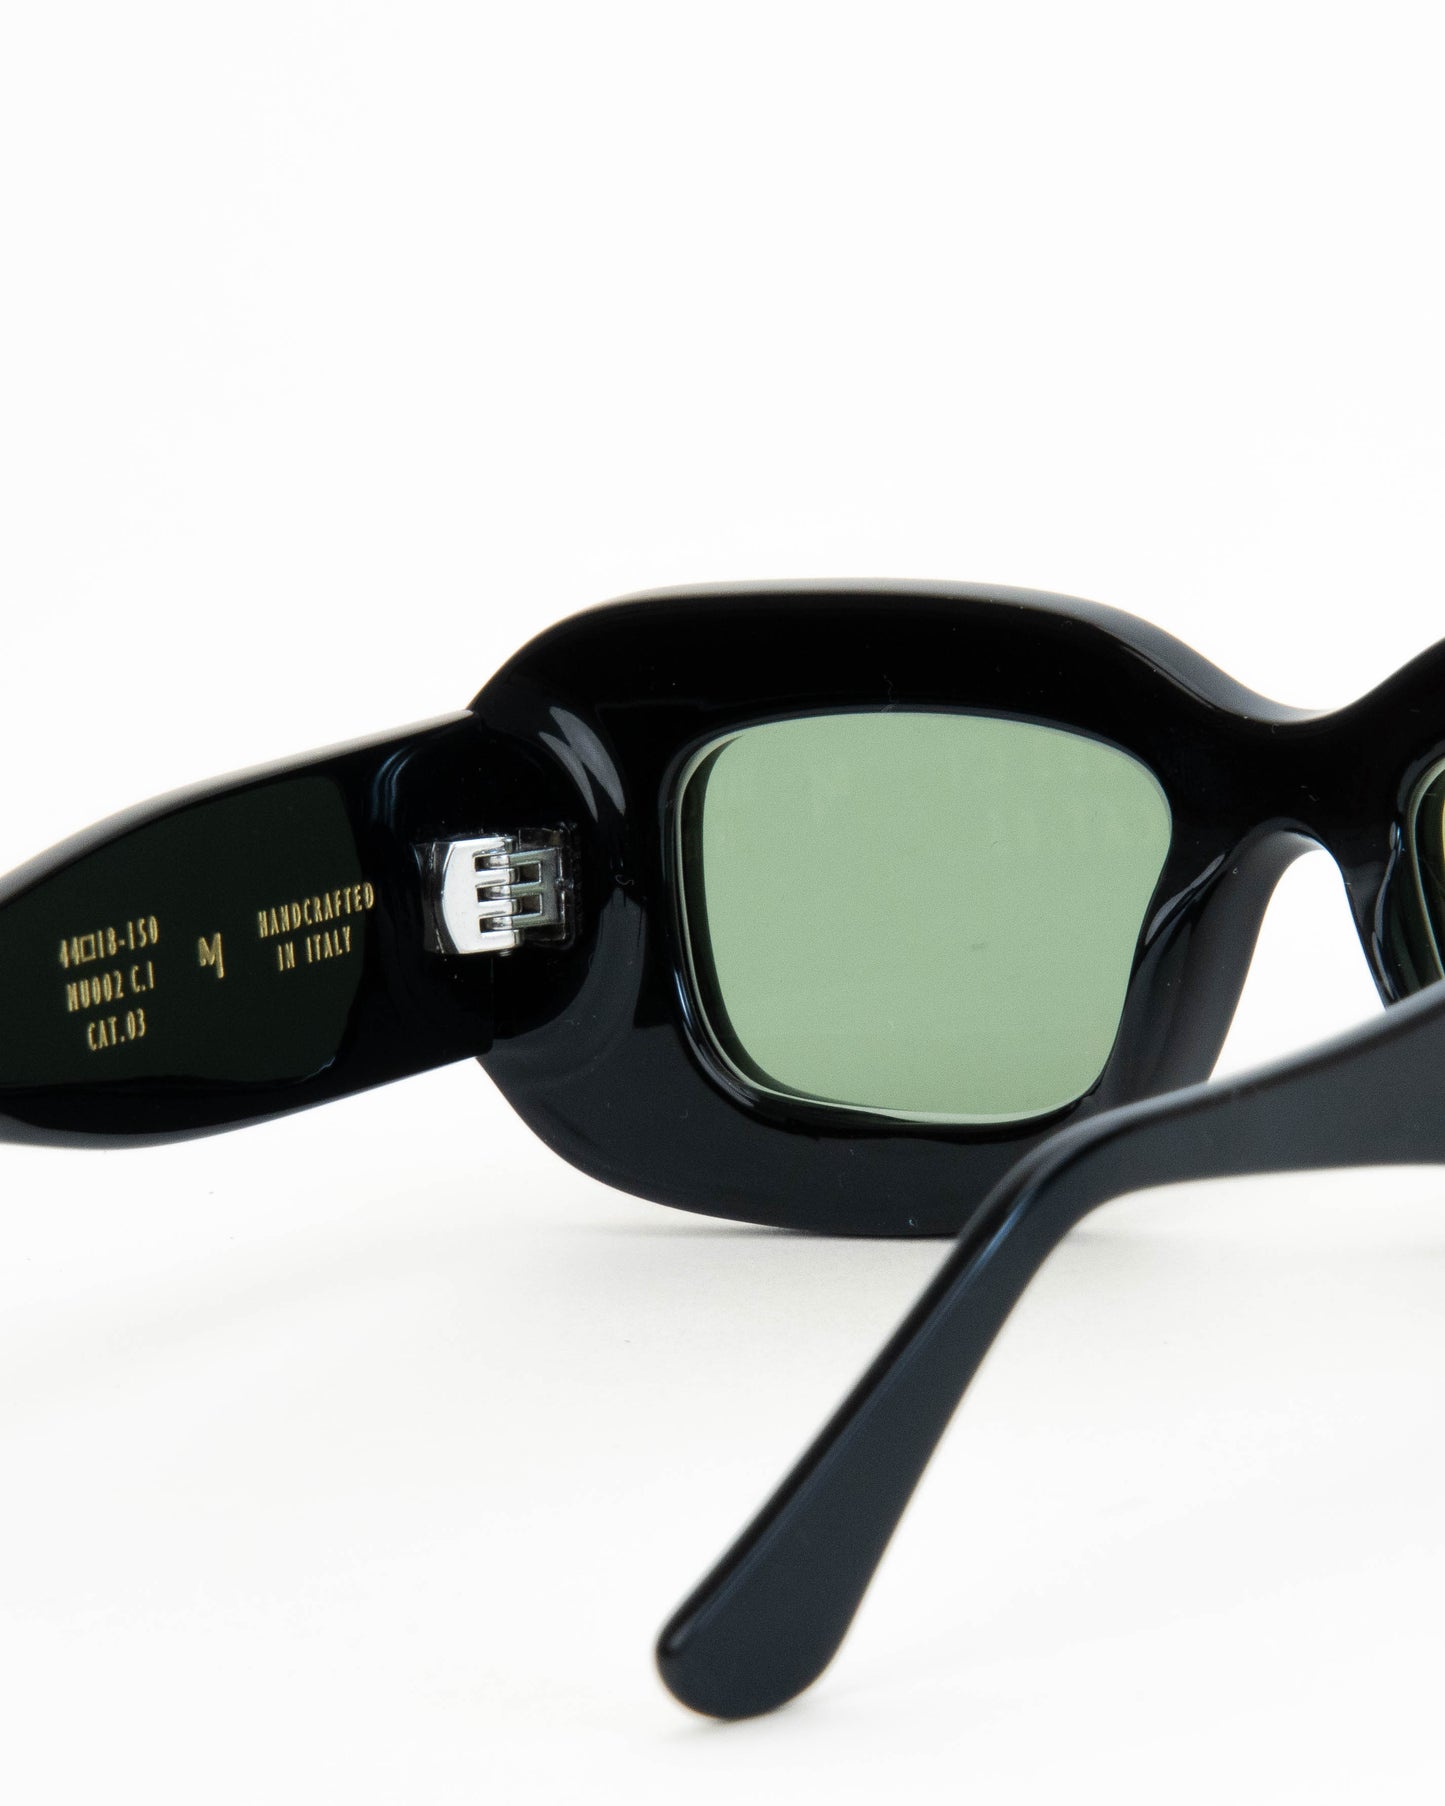 Vision Onyx Oval sunglasses